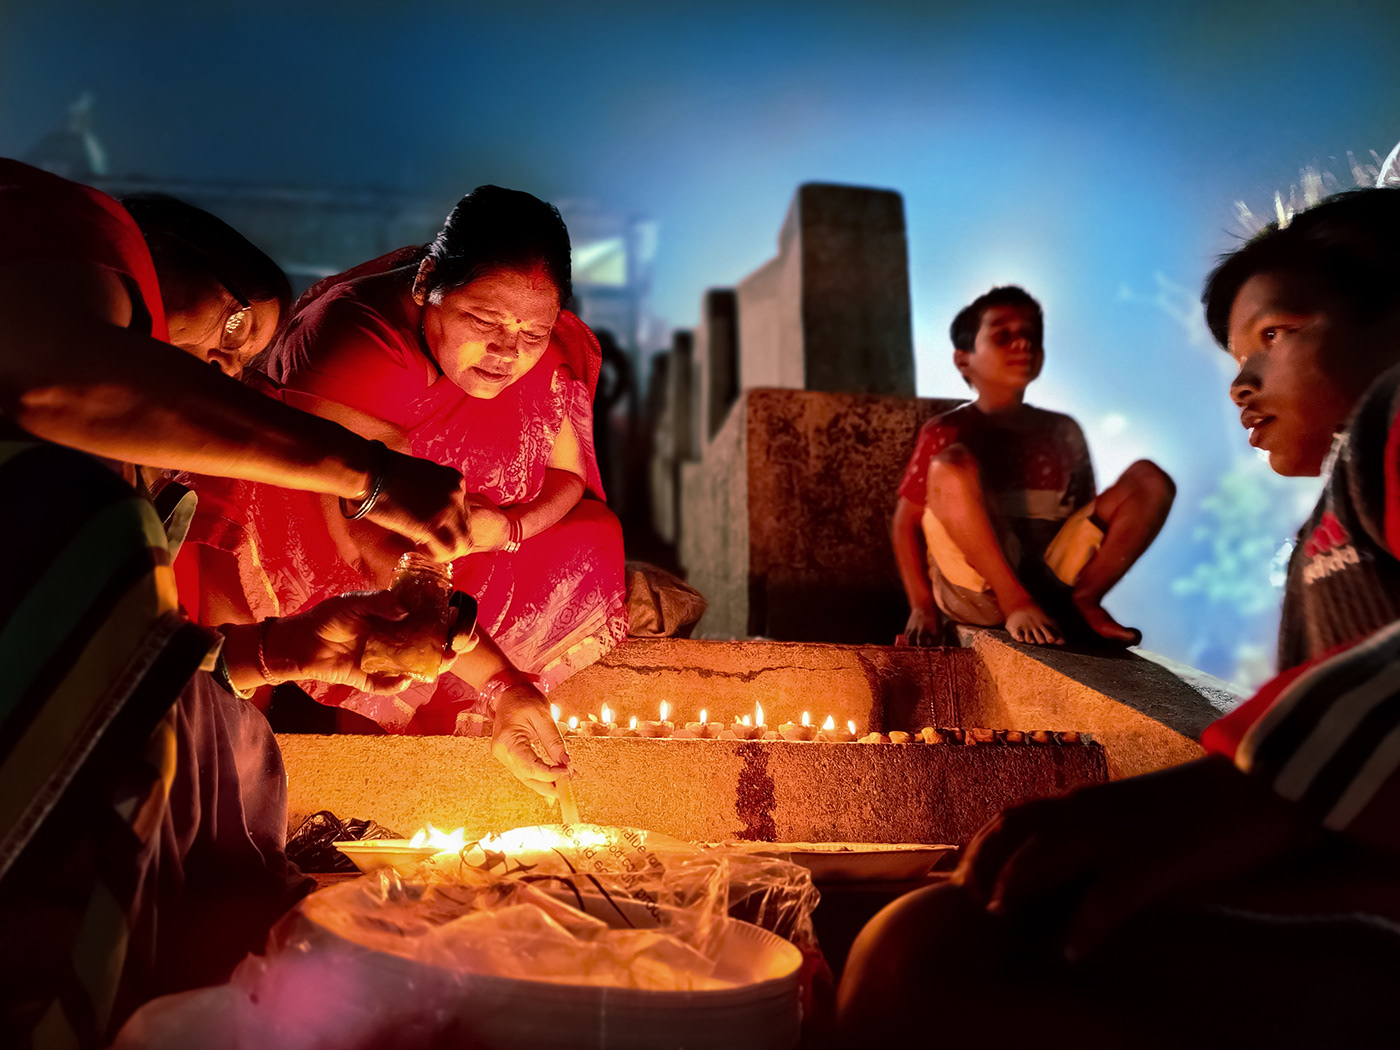 bangla culture Dev Deepavali festival ghat Hindu India Kolkata